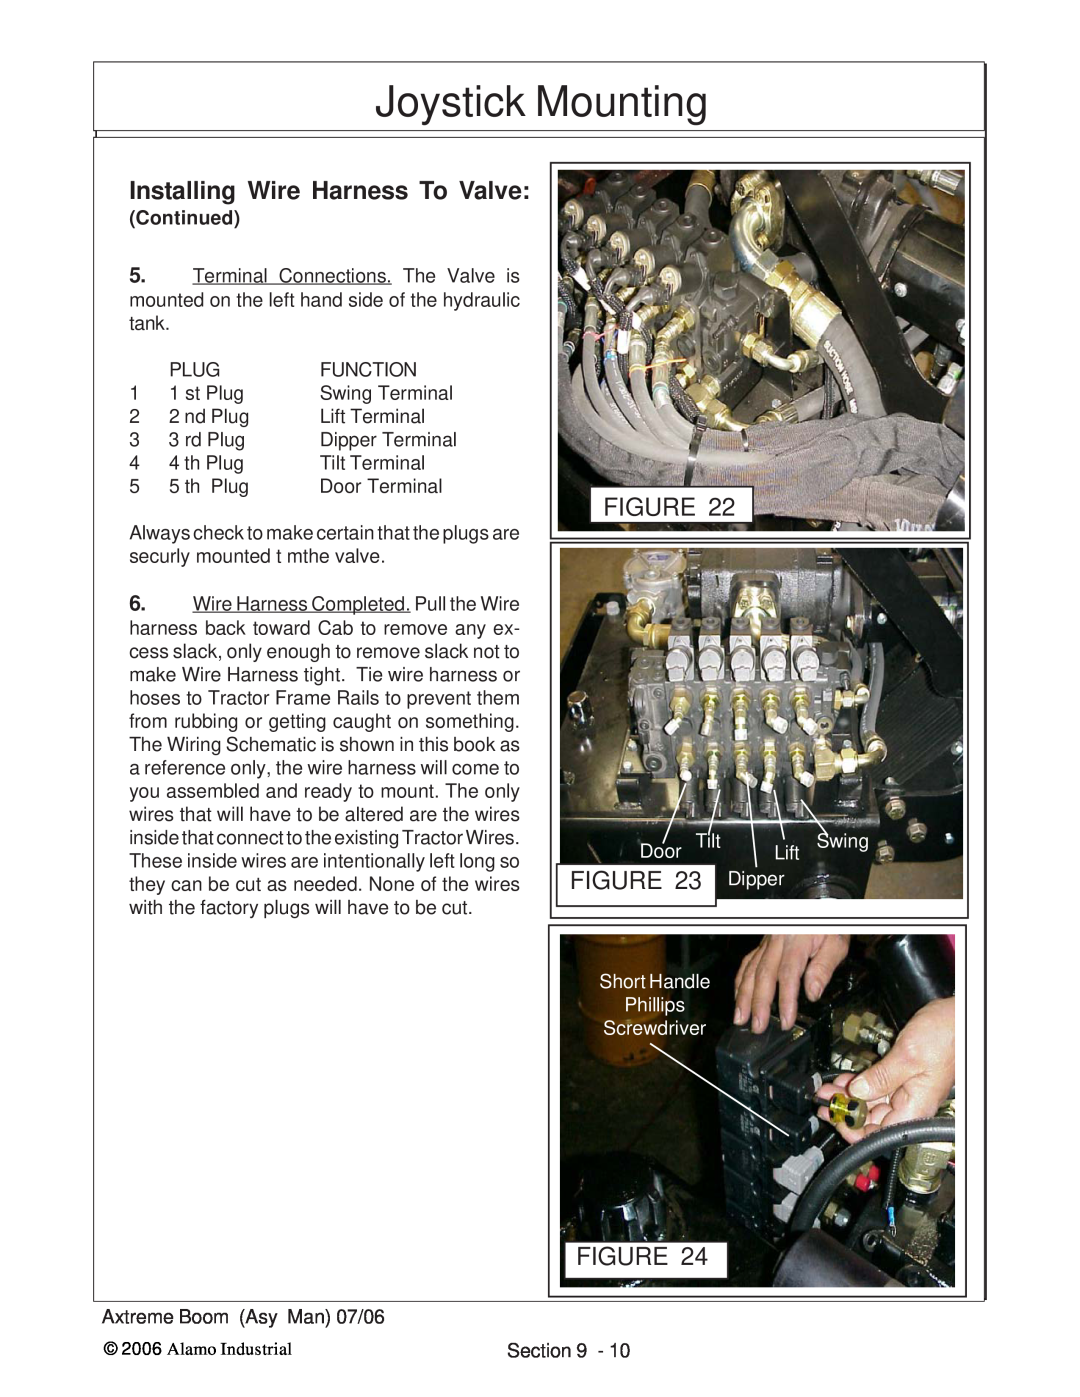 Alamo 02984405 instruction manual Joystick Mounting, Installing Wire Harness To Valve, Door Tilt, Lift Swing, Dipper 